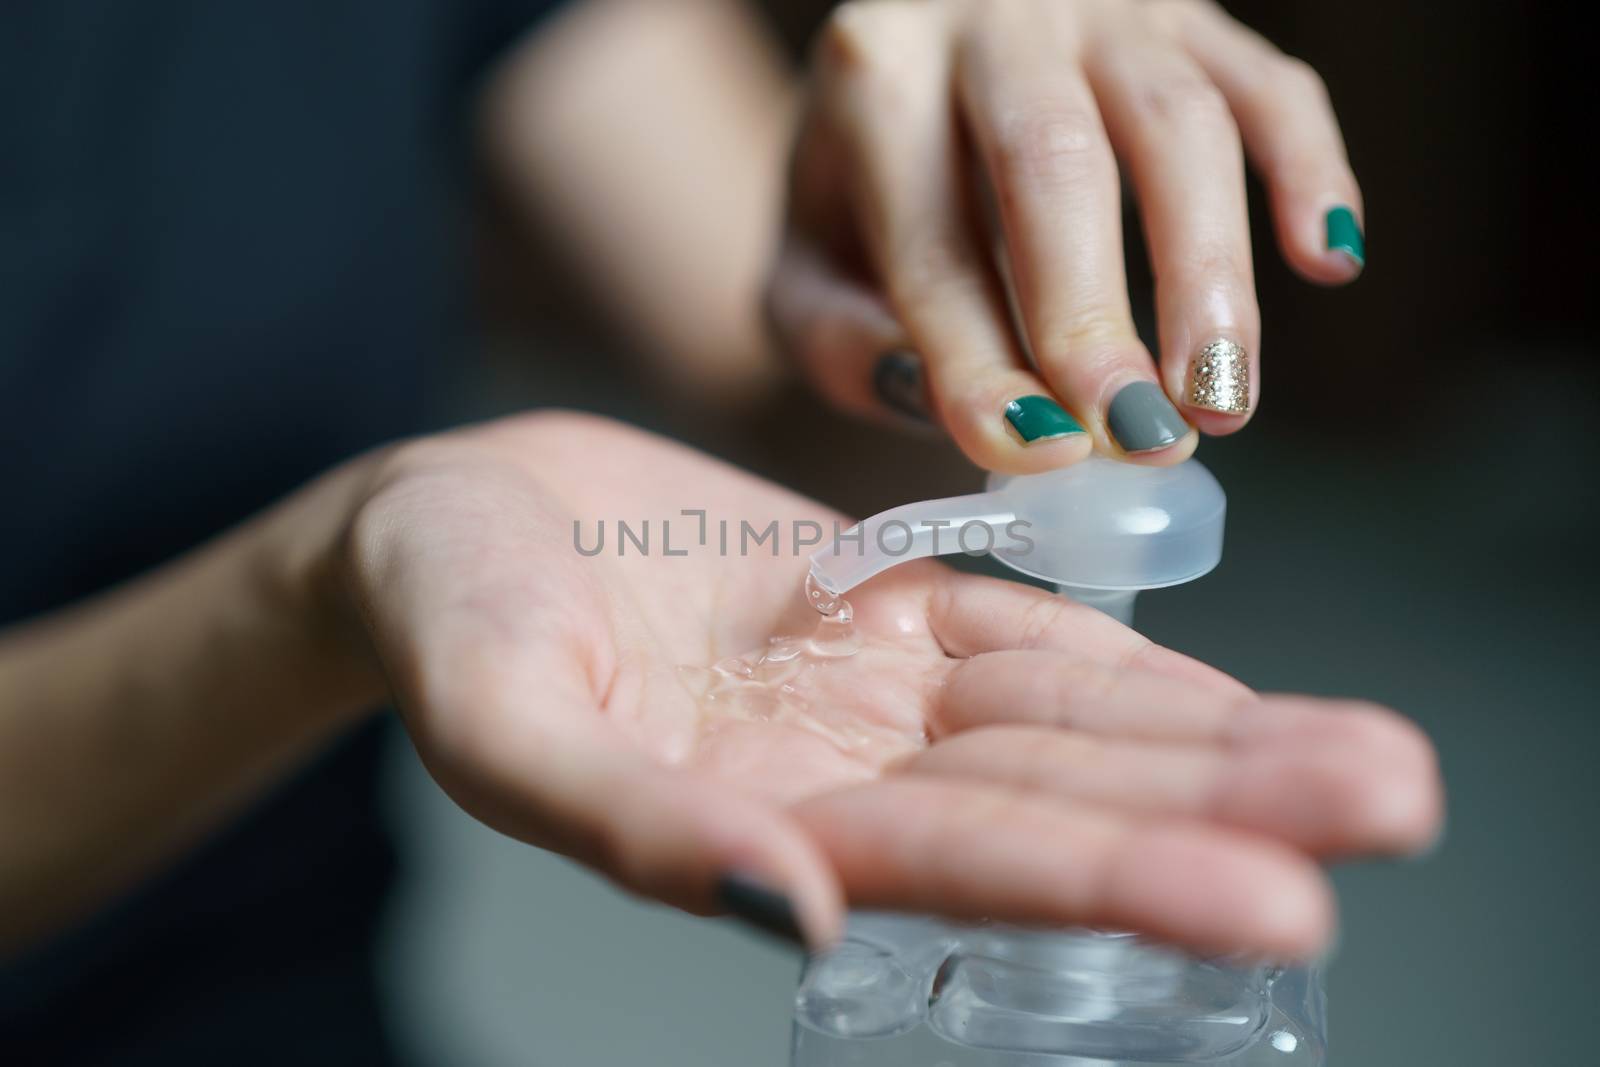 hands using wash hand sanitizer gel pump dispenser. Clear saniti by sirawit99